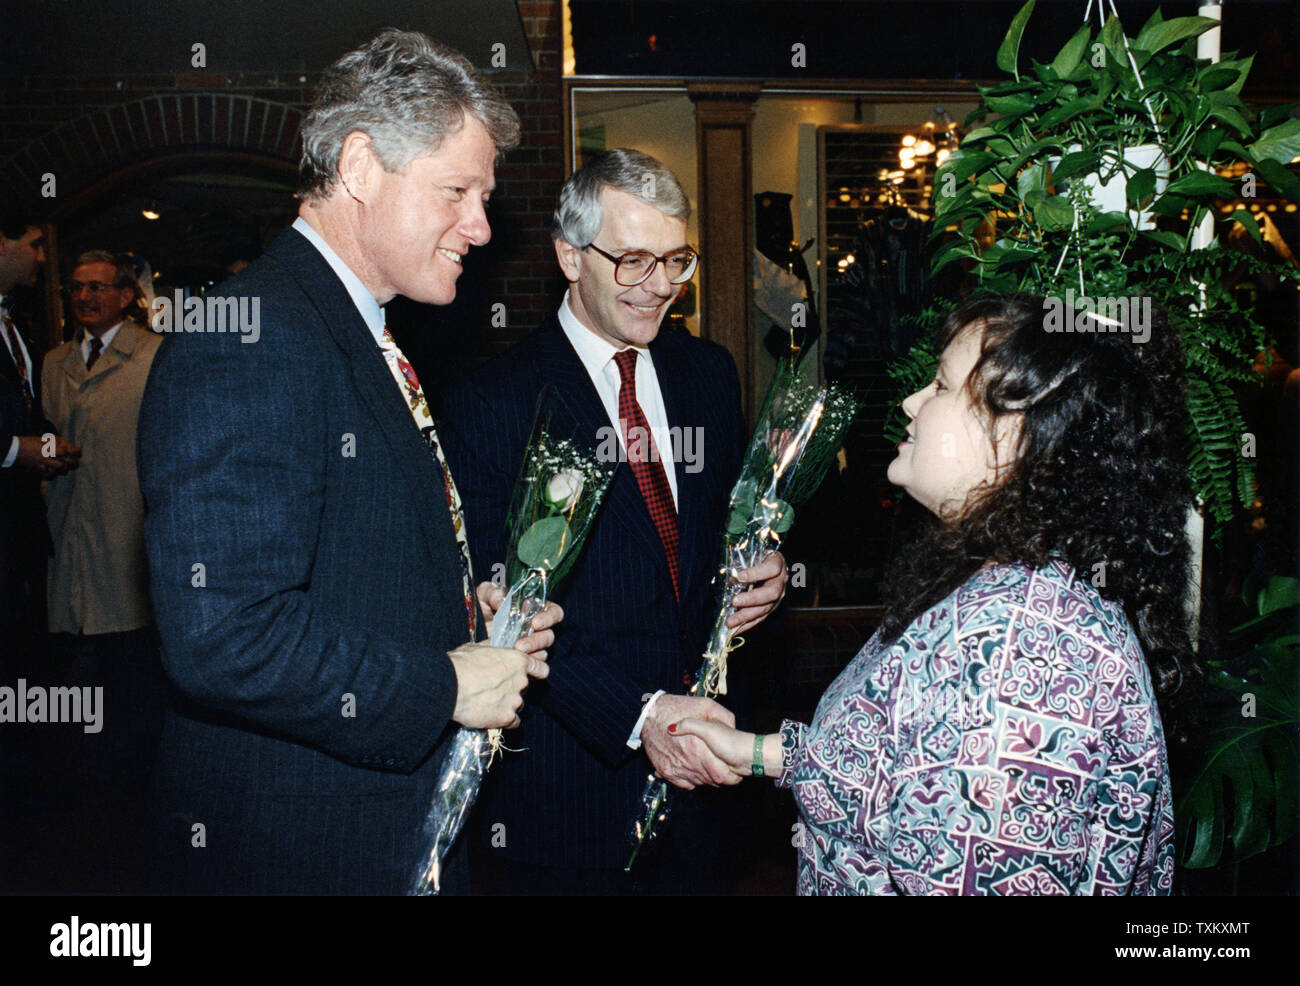 President Bill Clinton and British Prime Minister John Major receive flowers from flower shop clerk Leslie Taffel in Pittsburgh, Pennsylvania on February 28, 1994. UPI/Cliff Owen Stock Photo